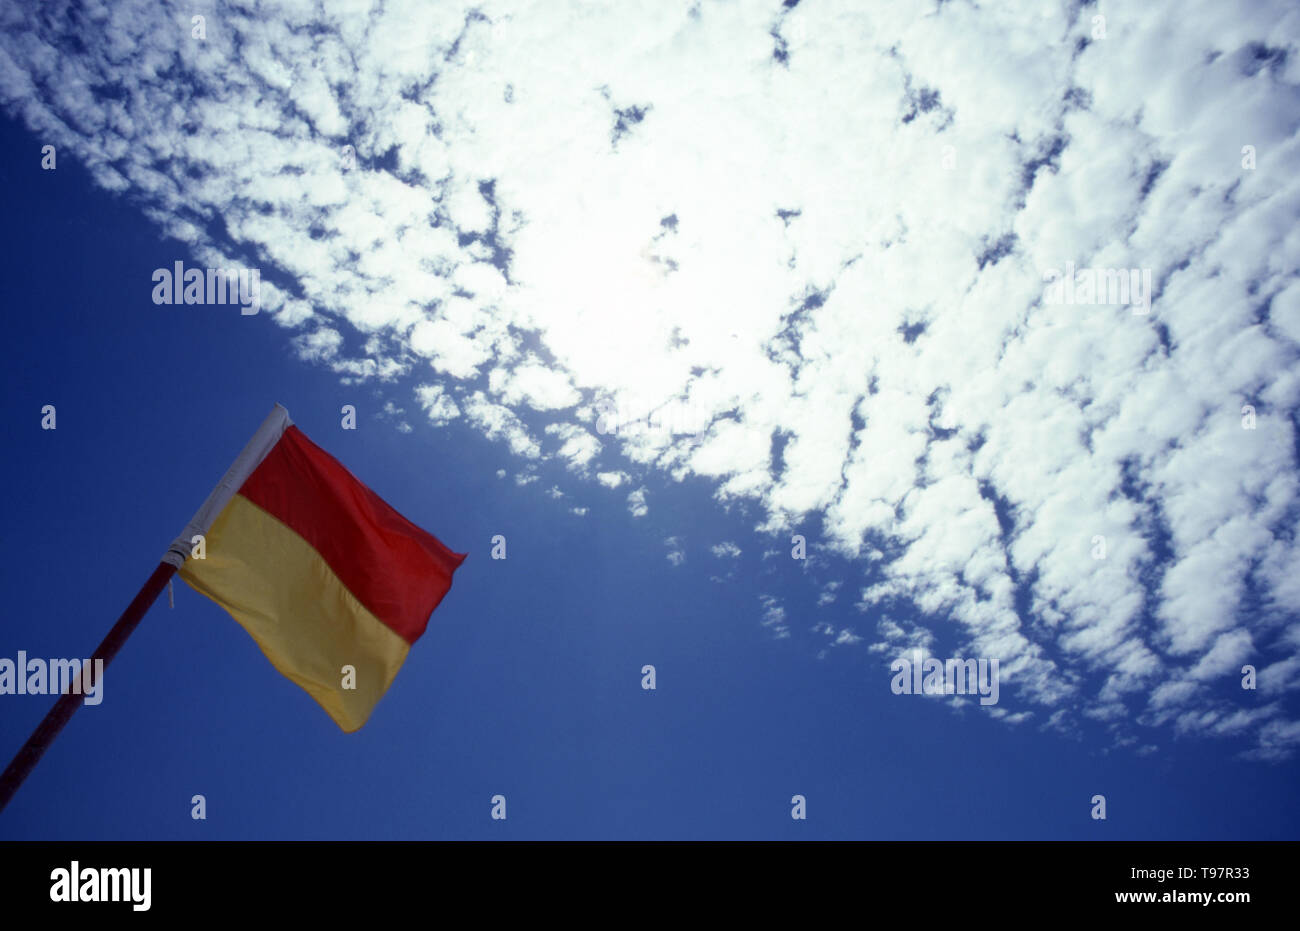 SURF LIFESAVING FLAGGE gegen den blauen Himmel und Wolken, Bondi, New South Wales, Australien. Stockfoto